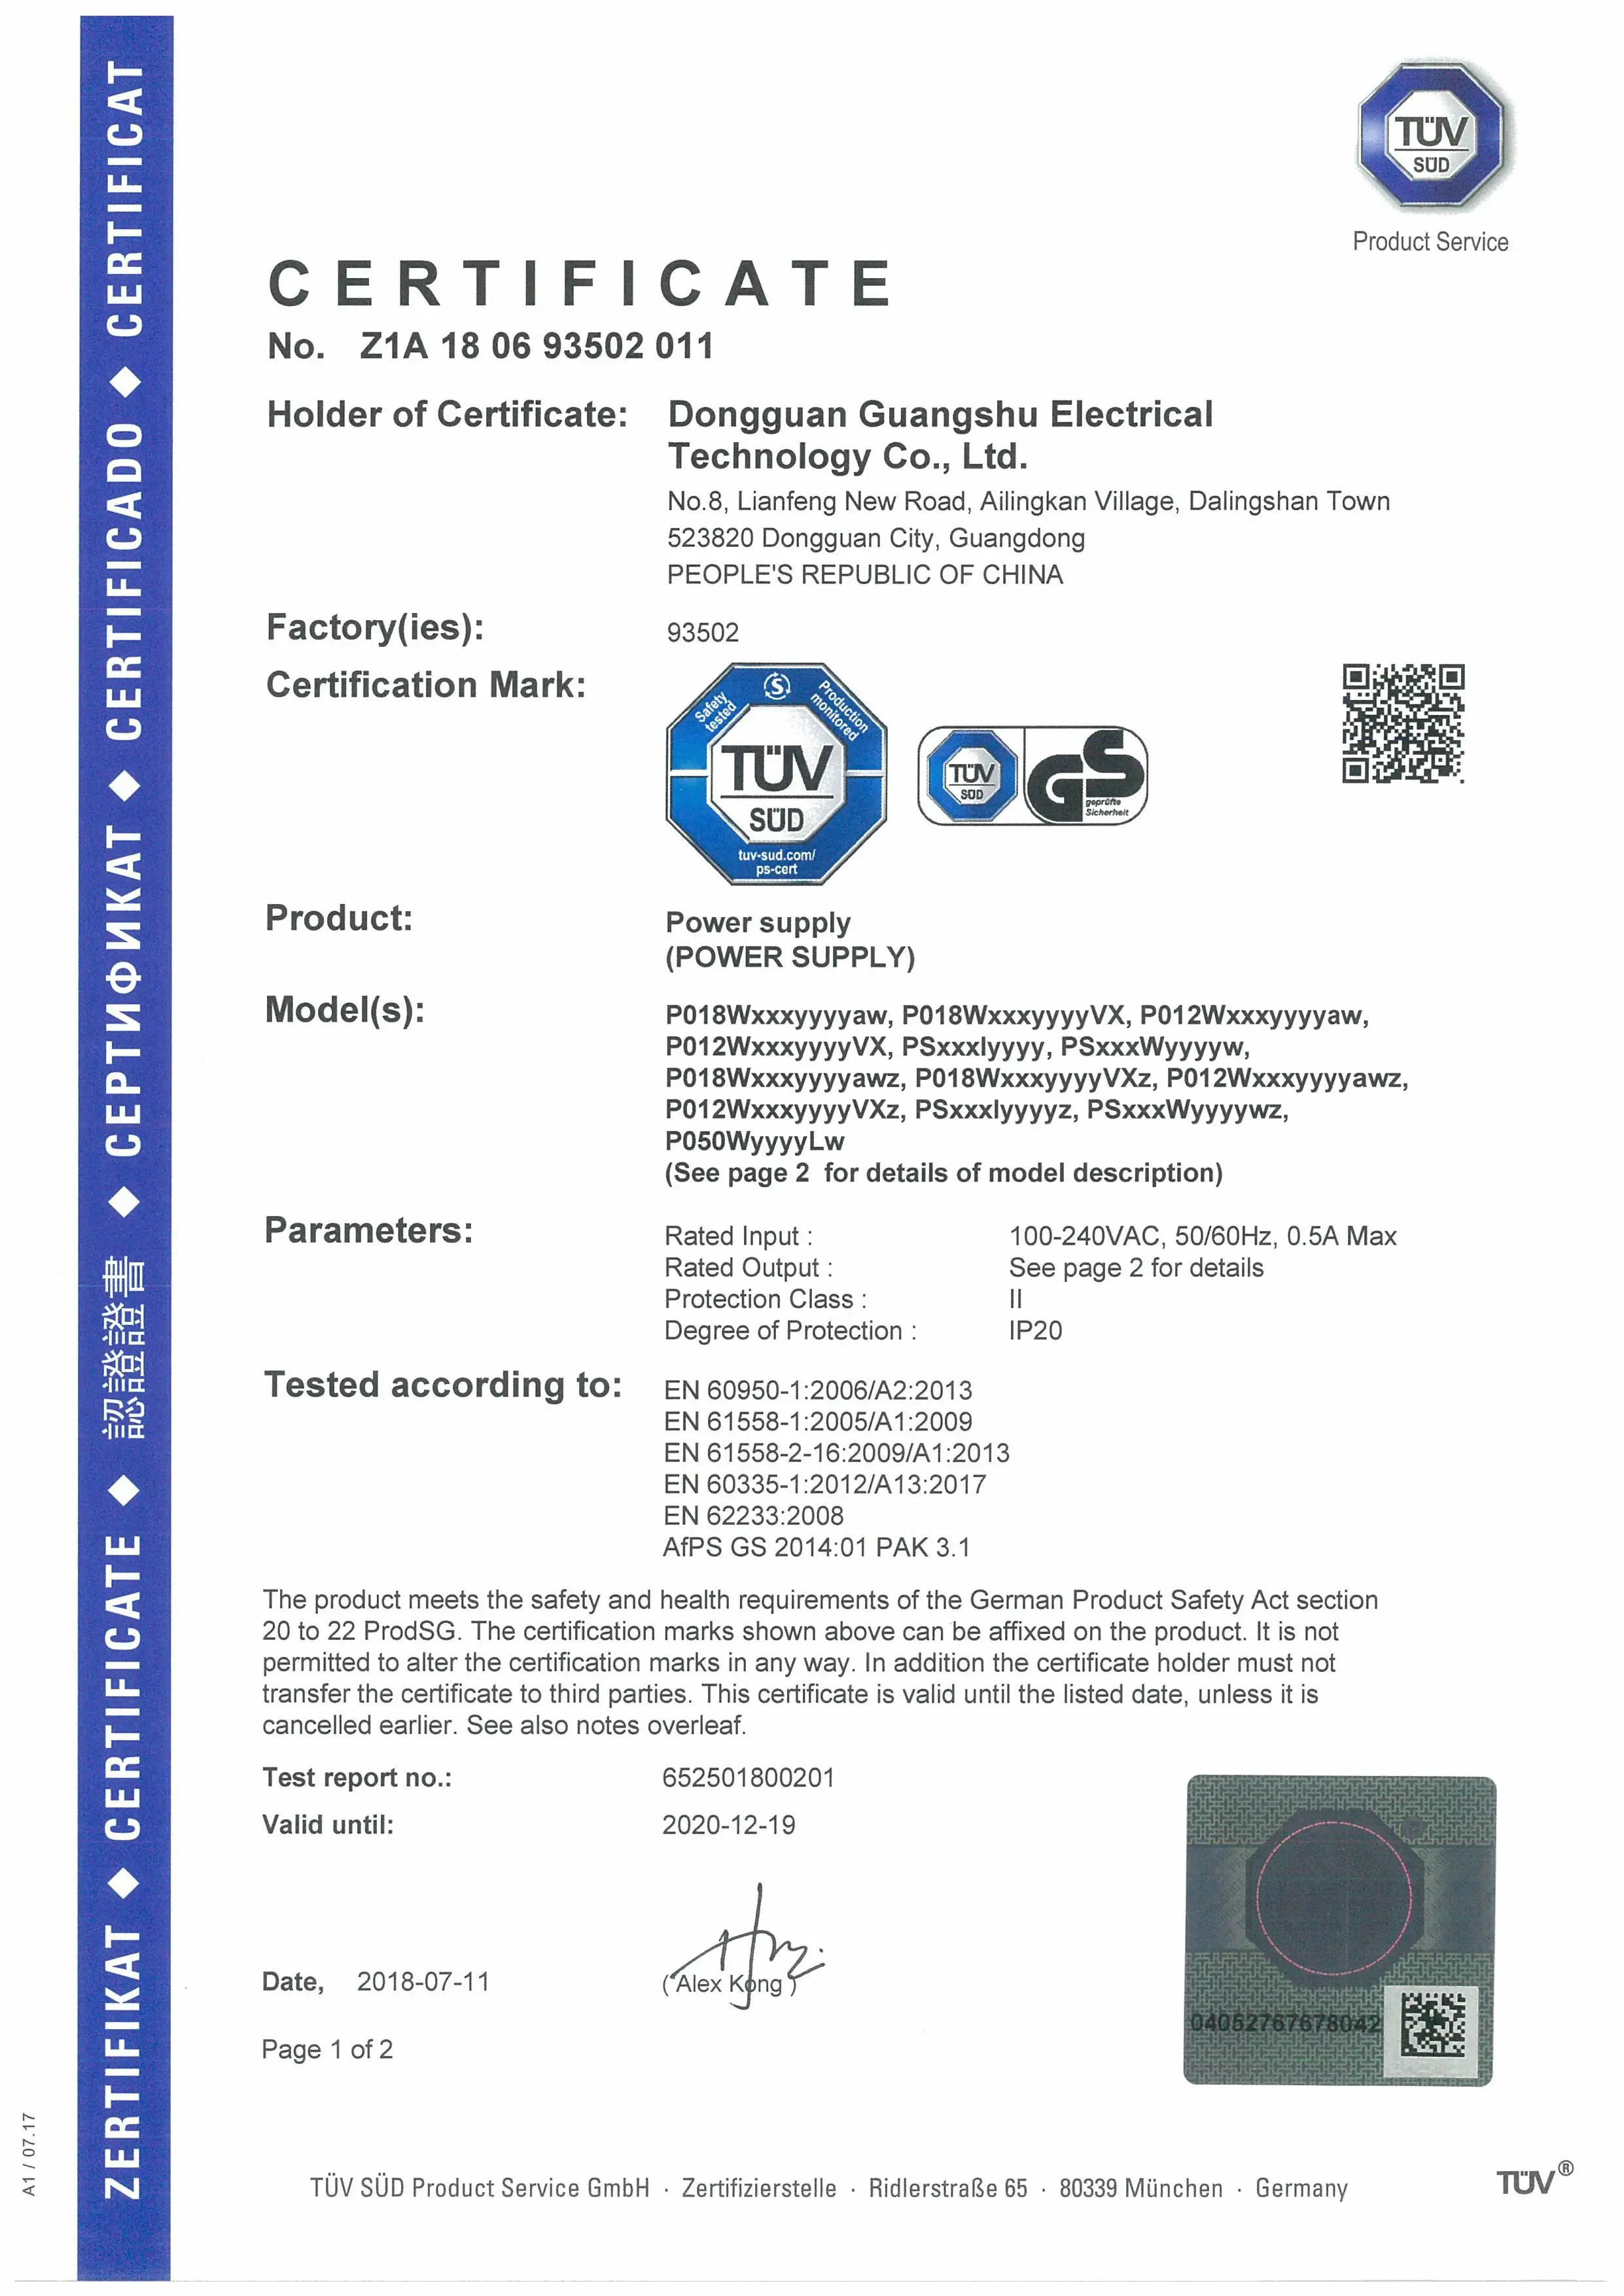 GS Certificate__1.jpg